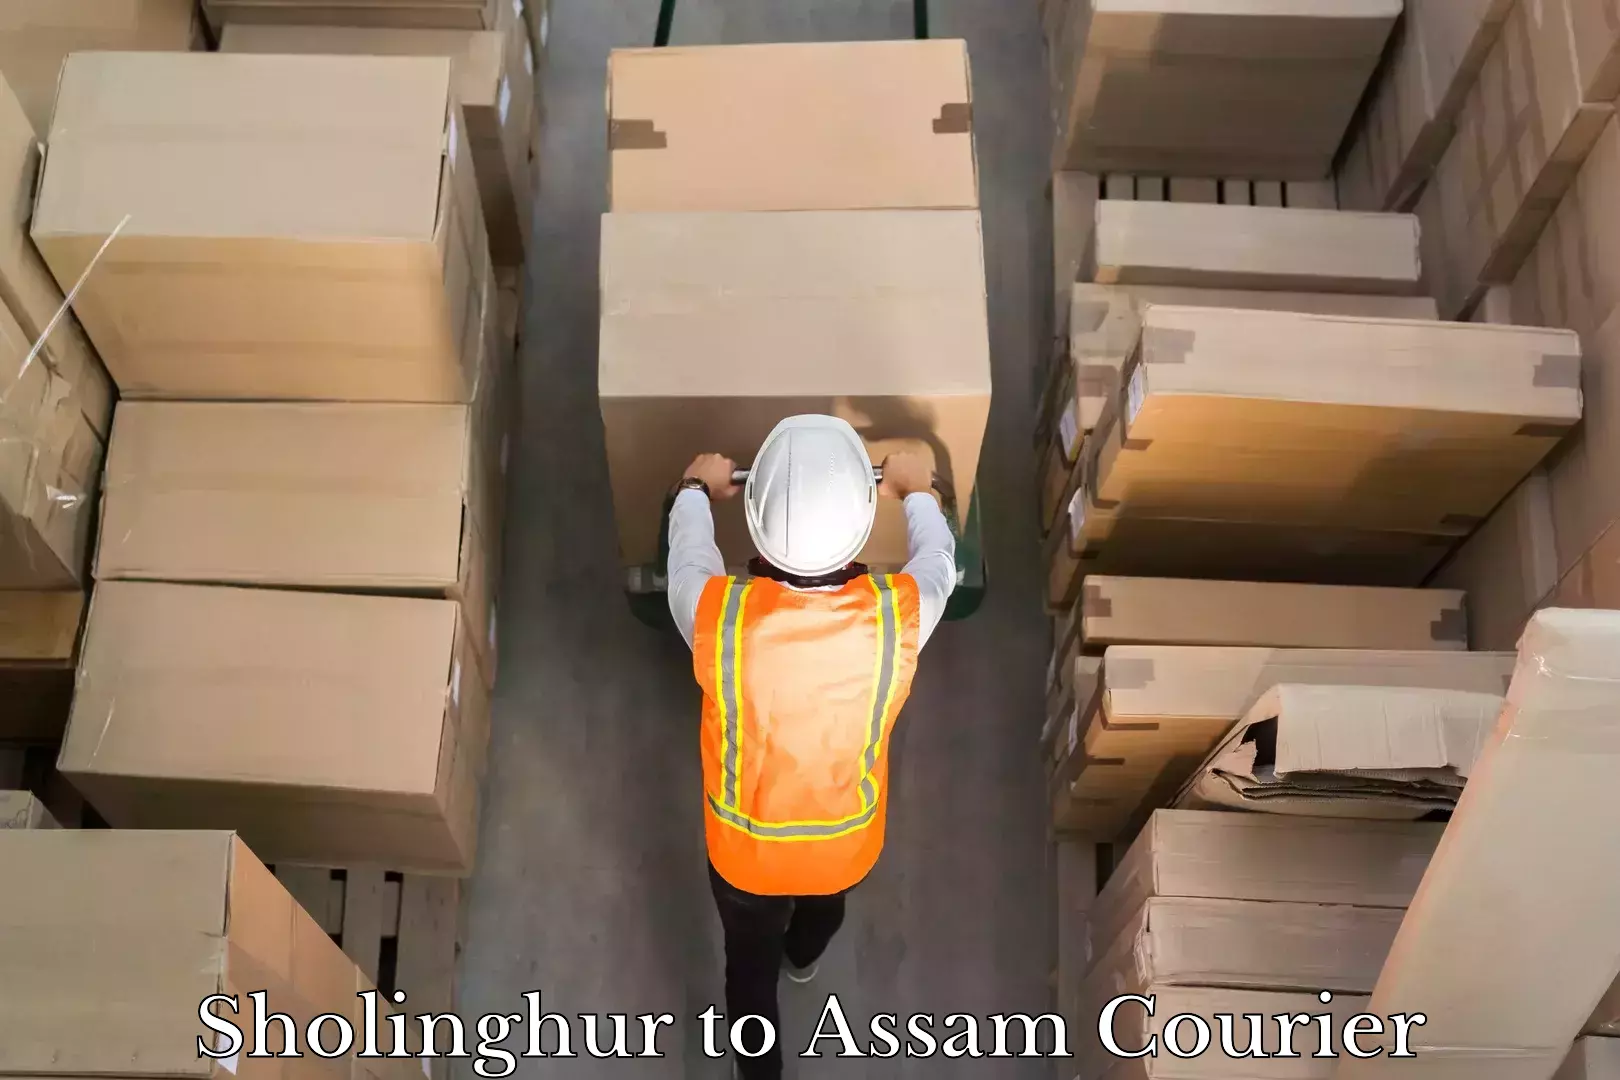 Courier service booking Sholinghur to Assam